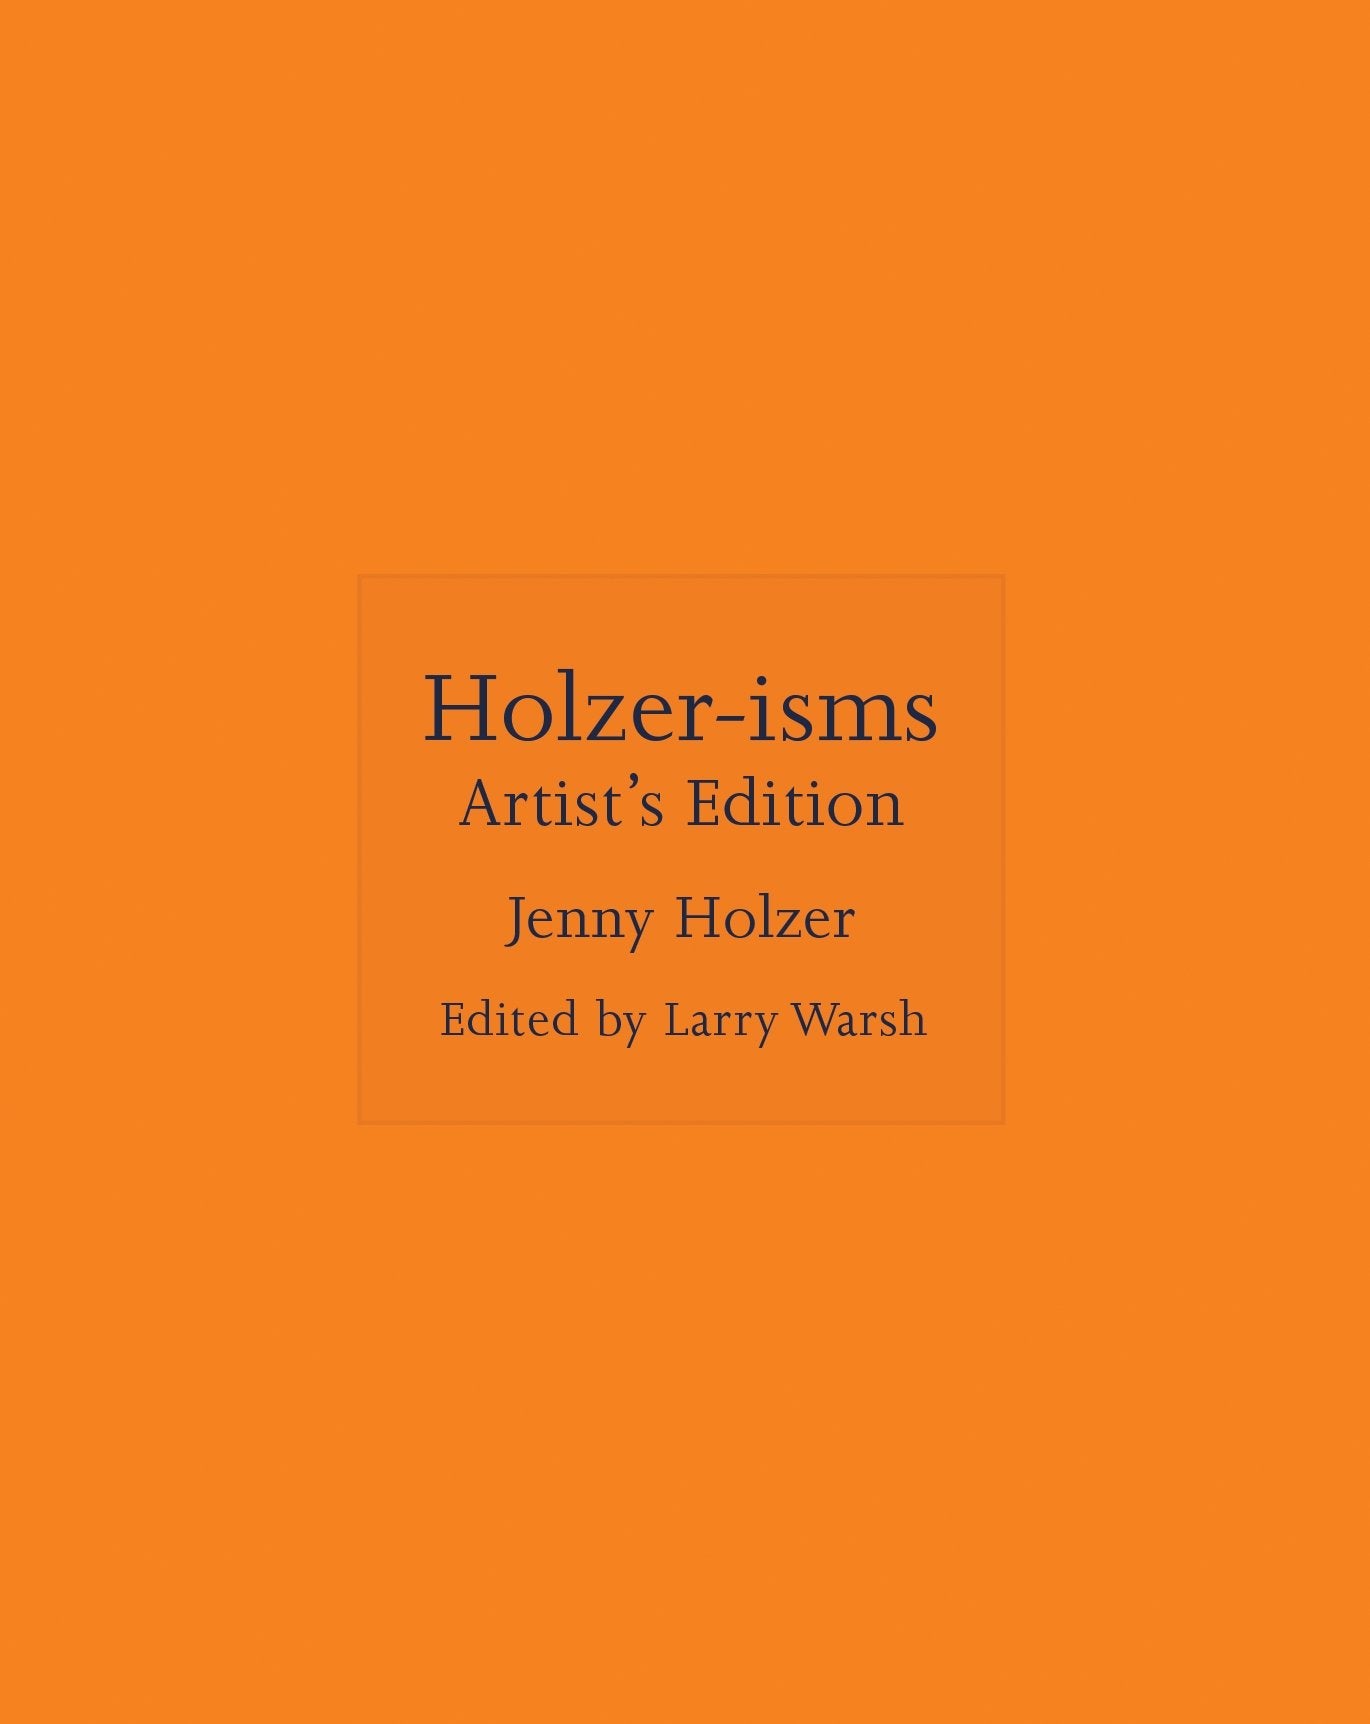 Holzer-isms Artist's Edition